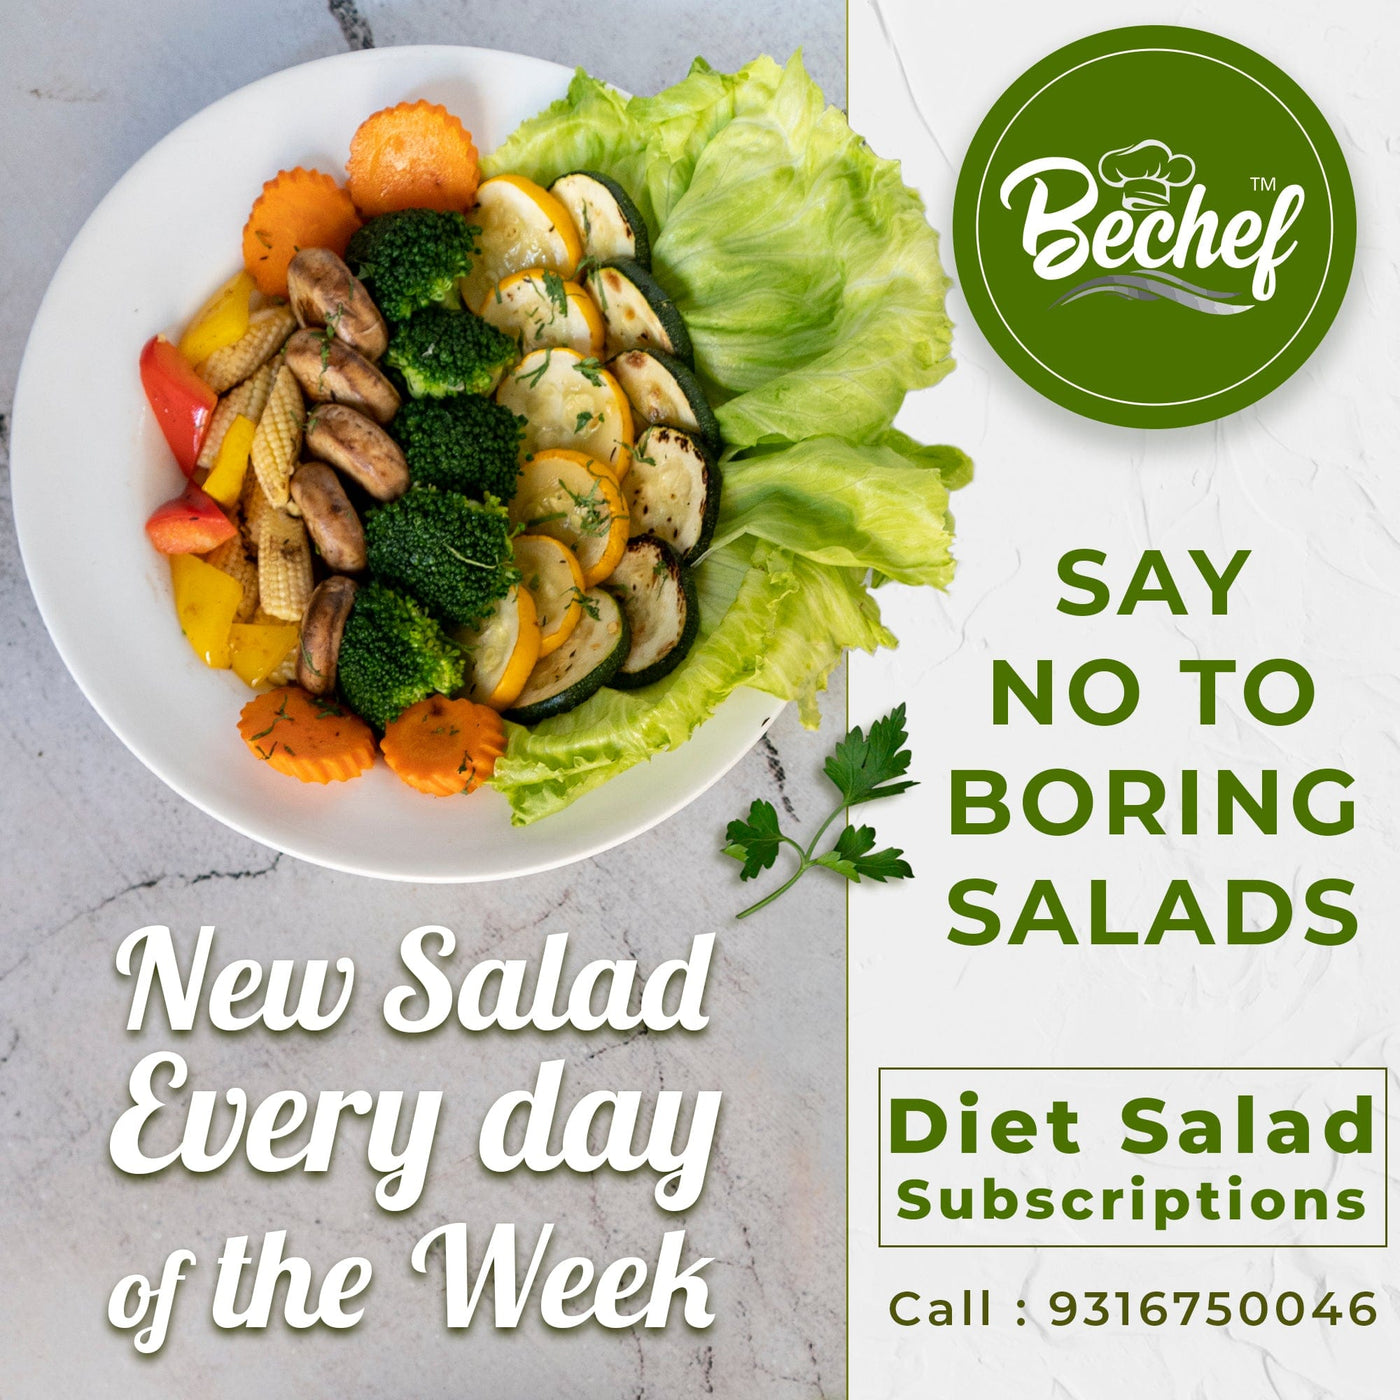 Vegan Salad Bowl Subscription Plan - Bechef - Gourmet Pantry Essentials